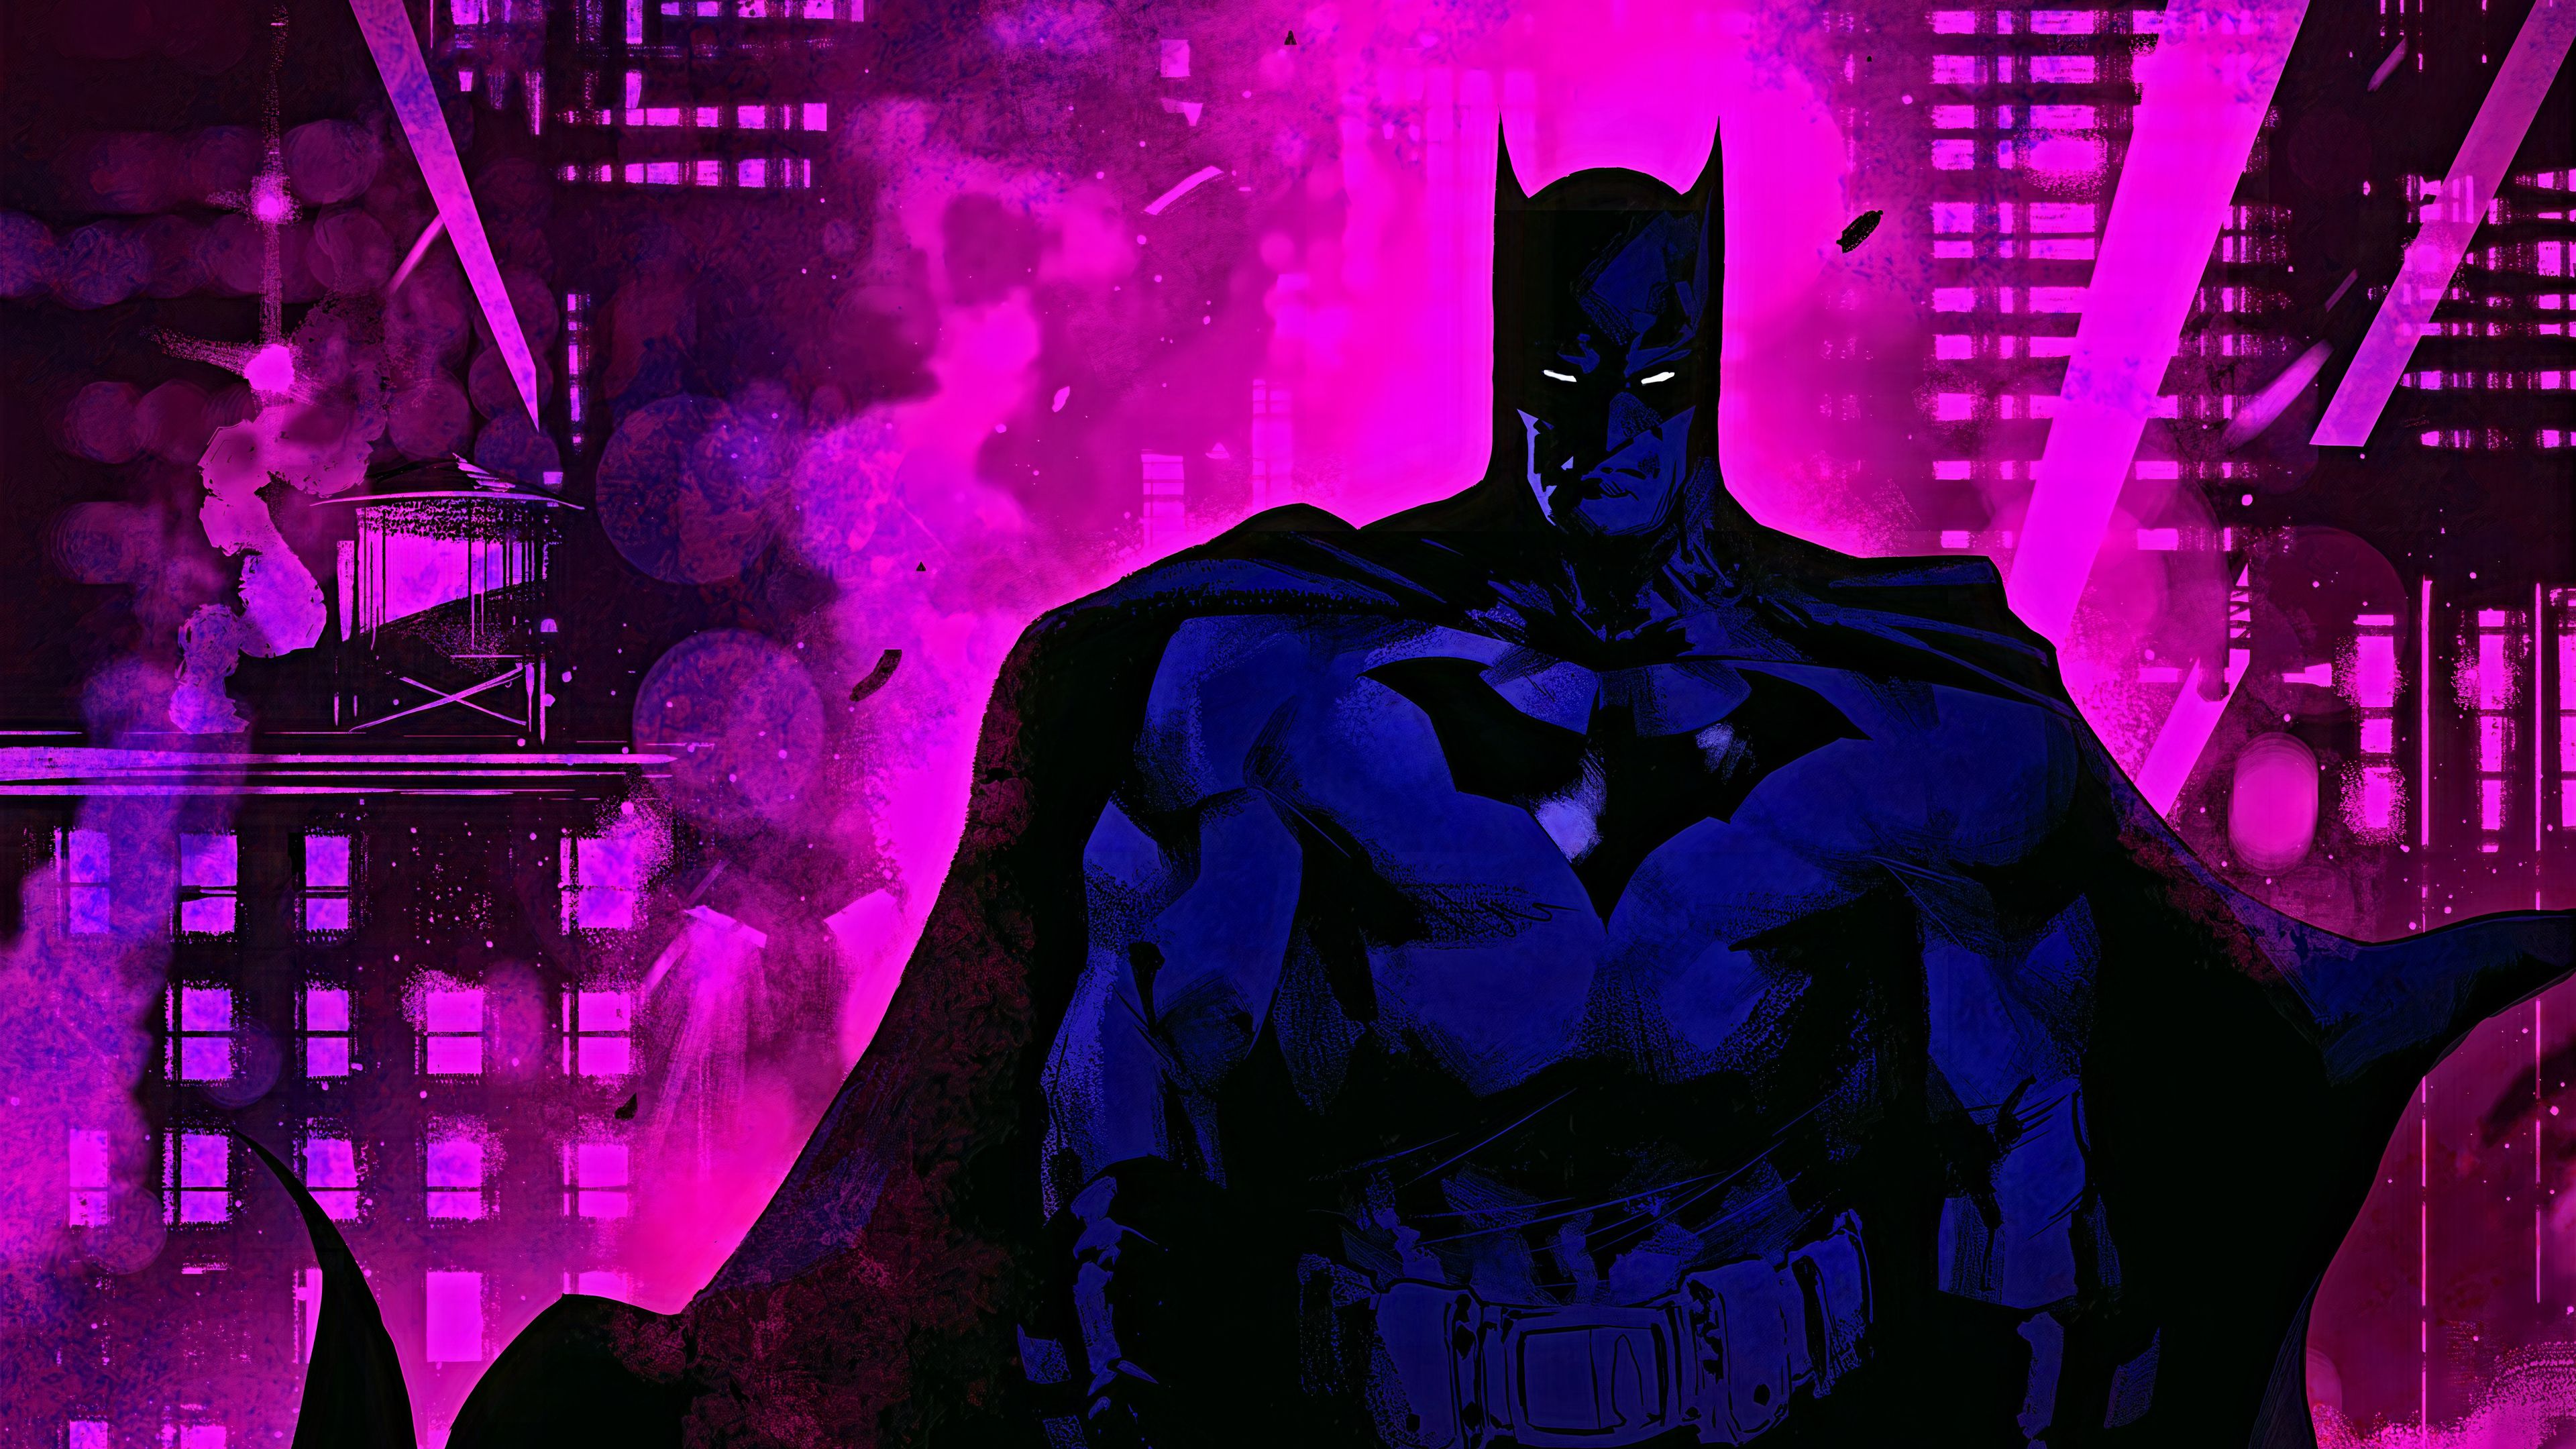 Batman Purple Theme, HD Superheroes, 4k Wallpaper, Image, Background, Photo and Picture